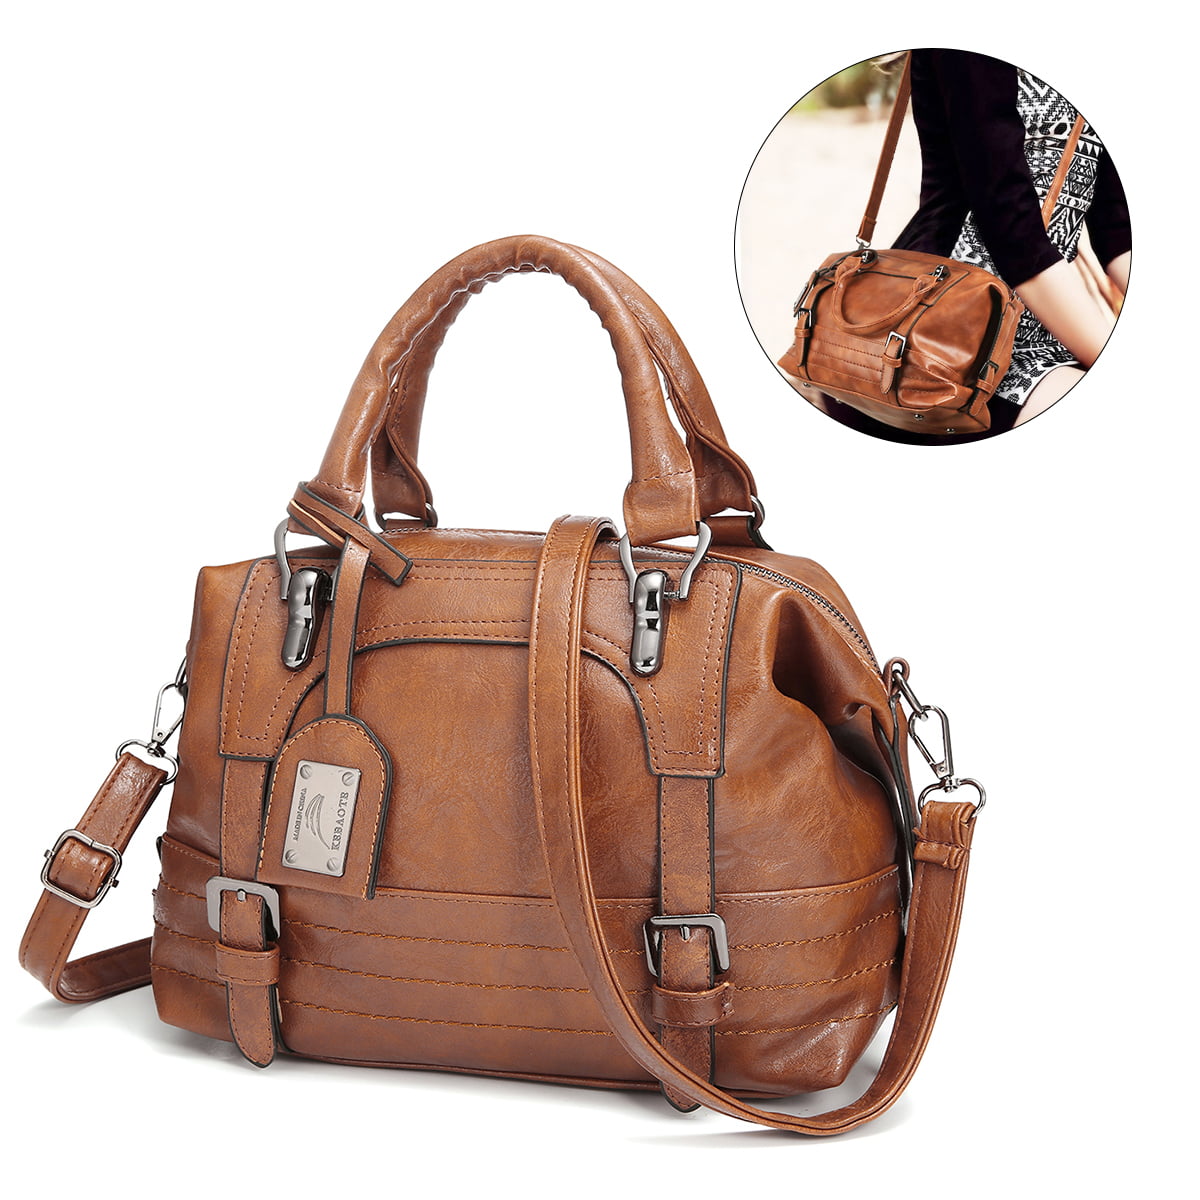 Women Lady PU Leather Handbags Messenger Body Cross Bag Shoulder Fashion Bags